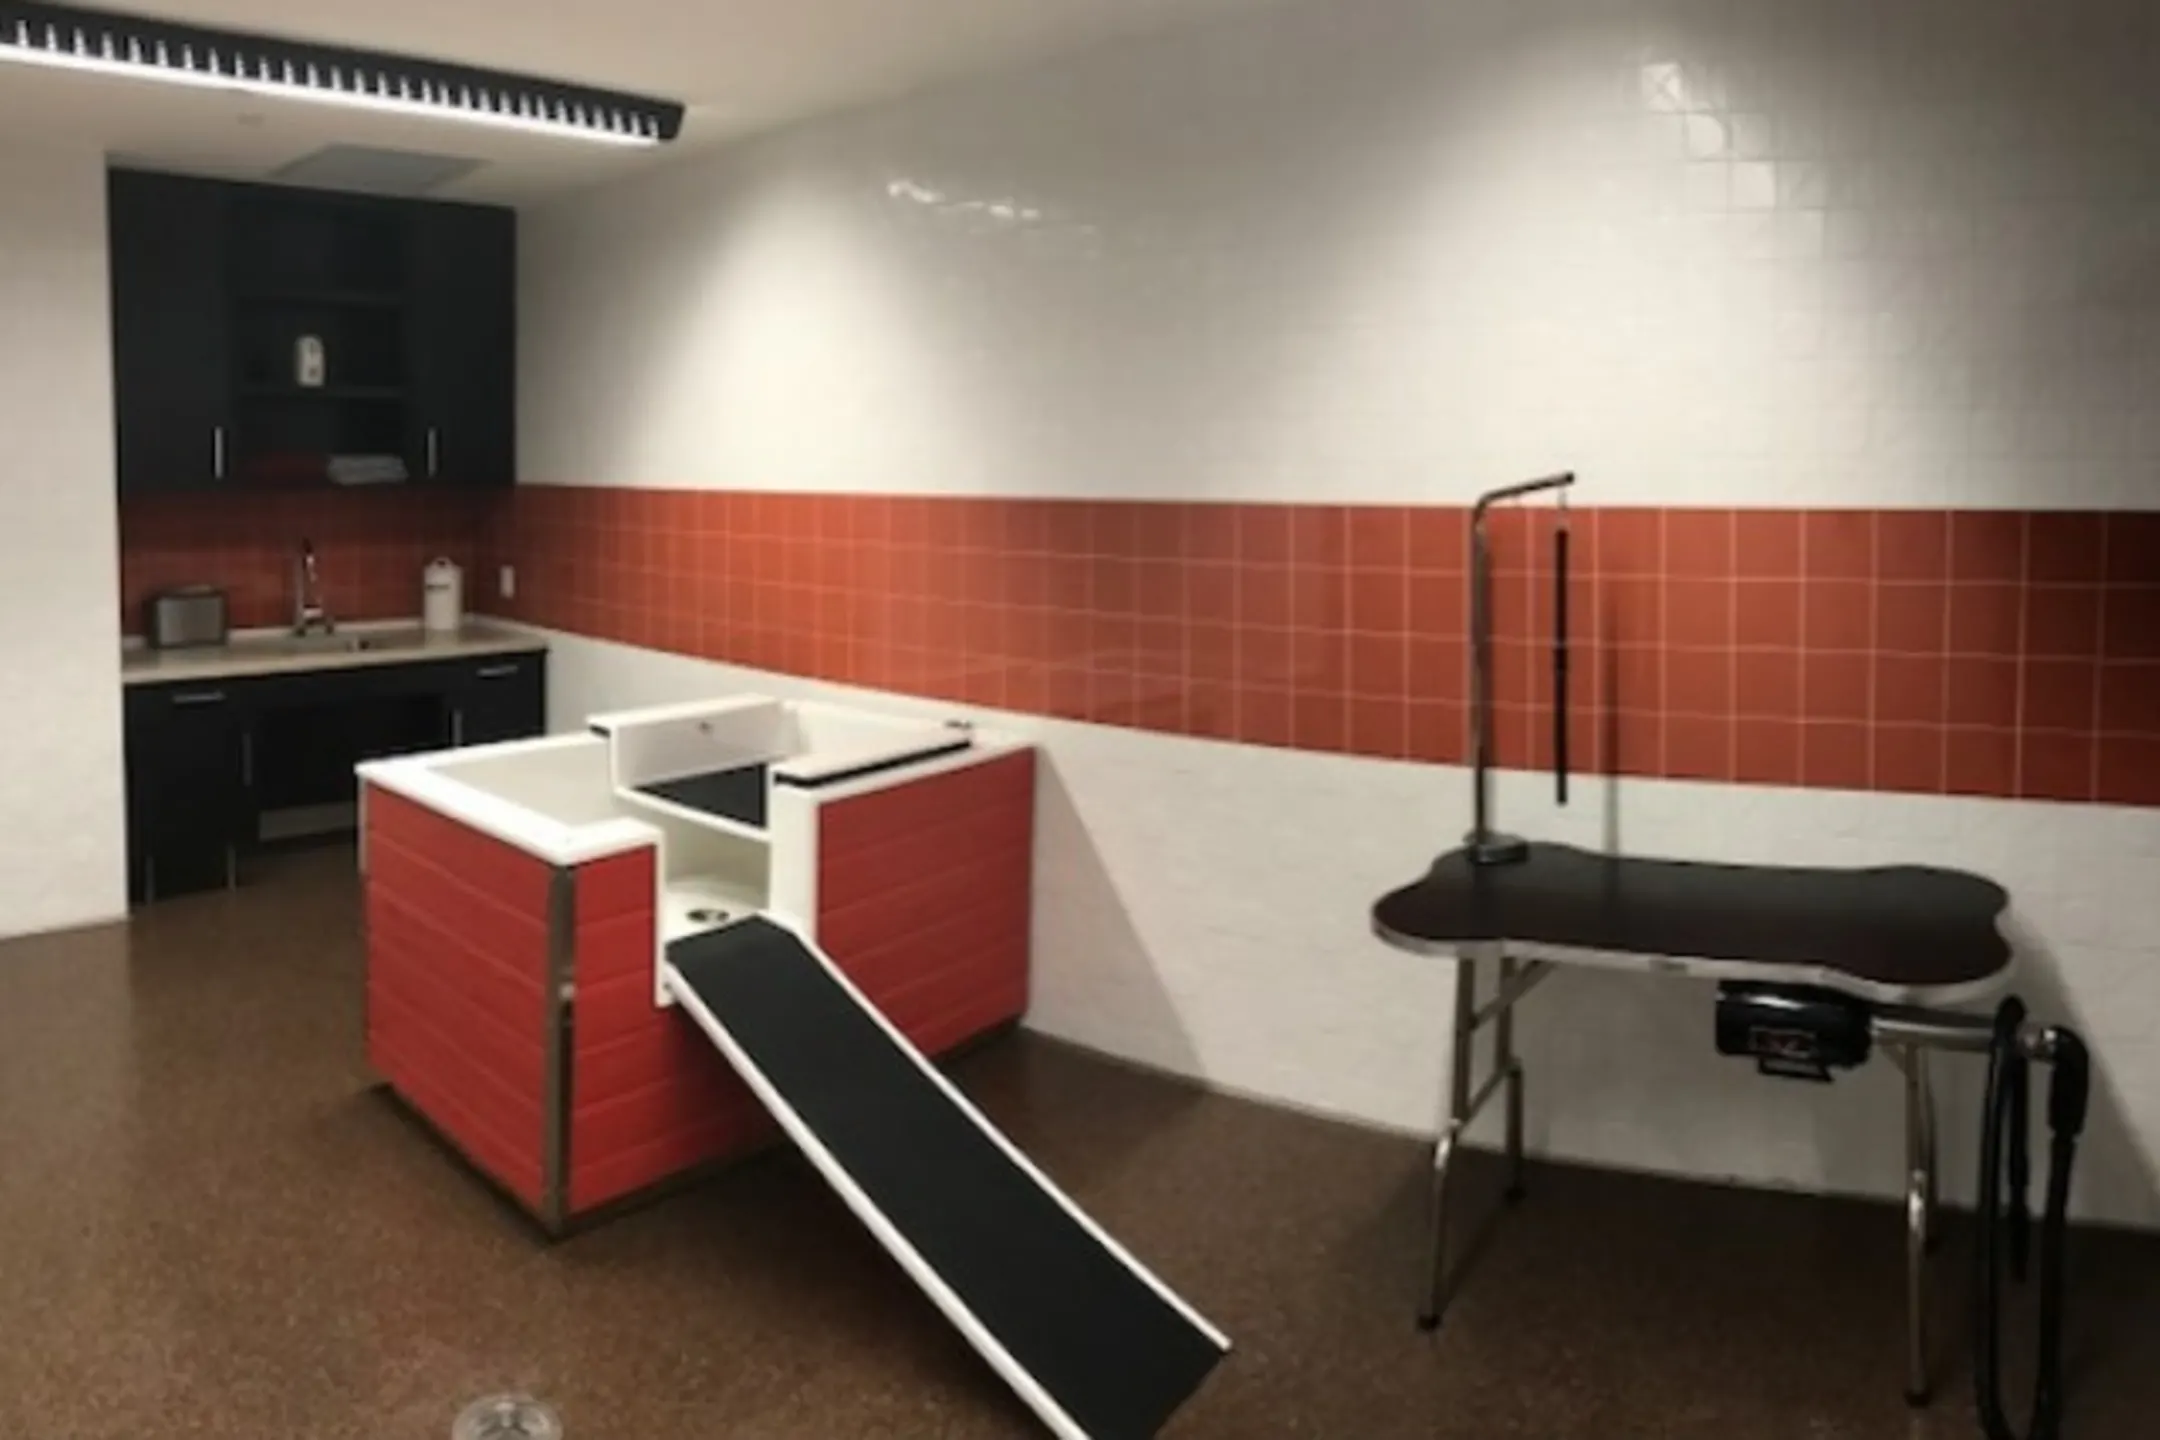 Kitchen - 2Hopkins Apartments - Baltimore, MD